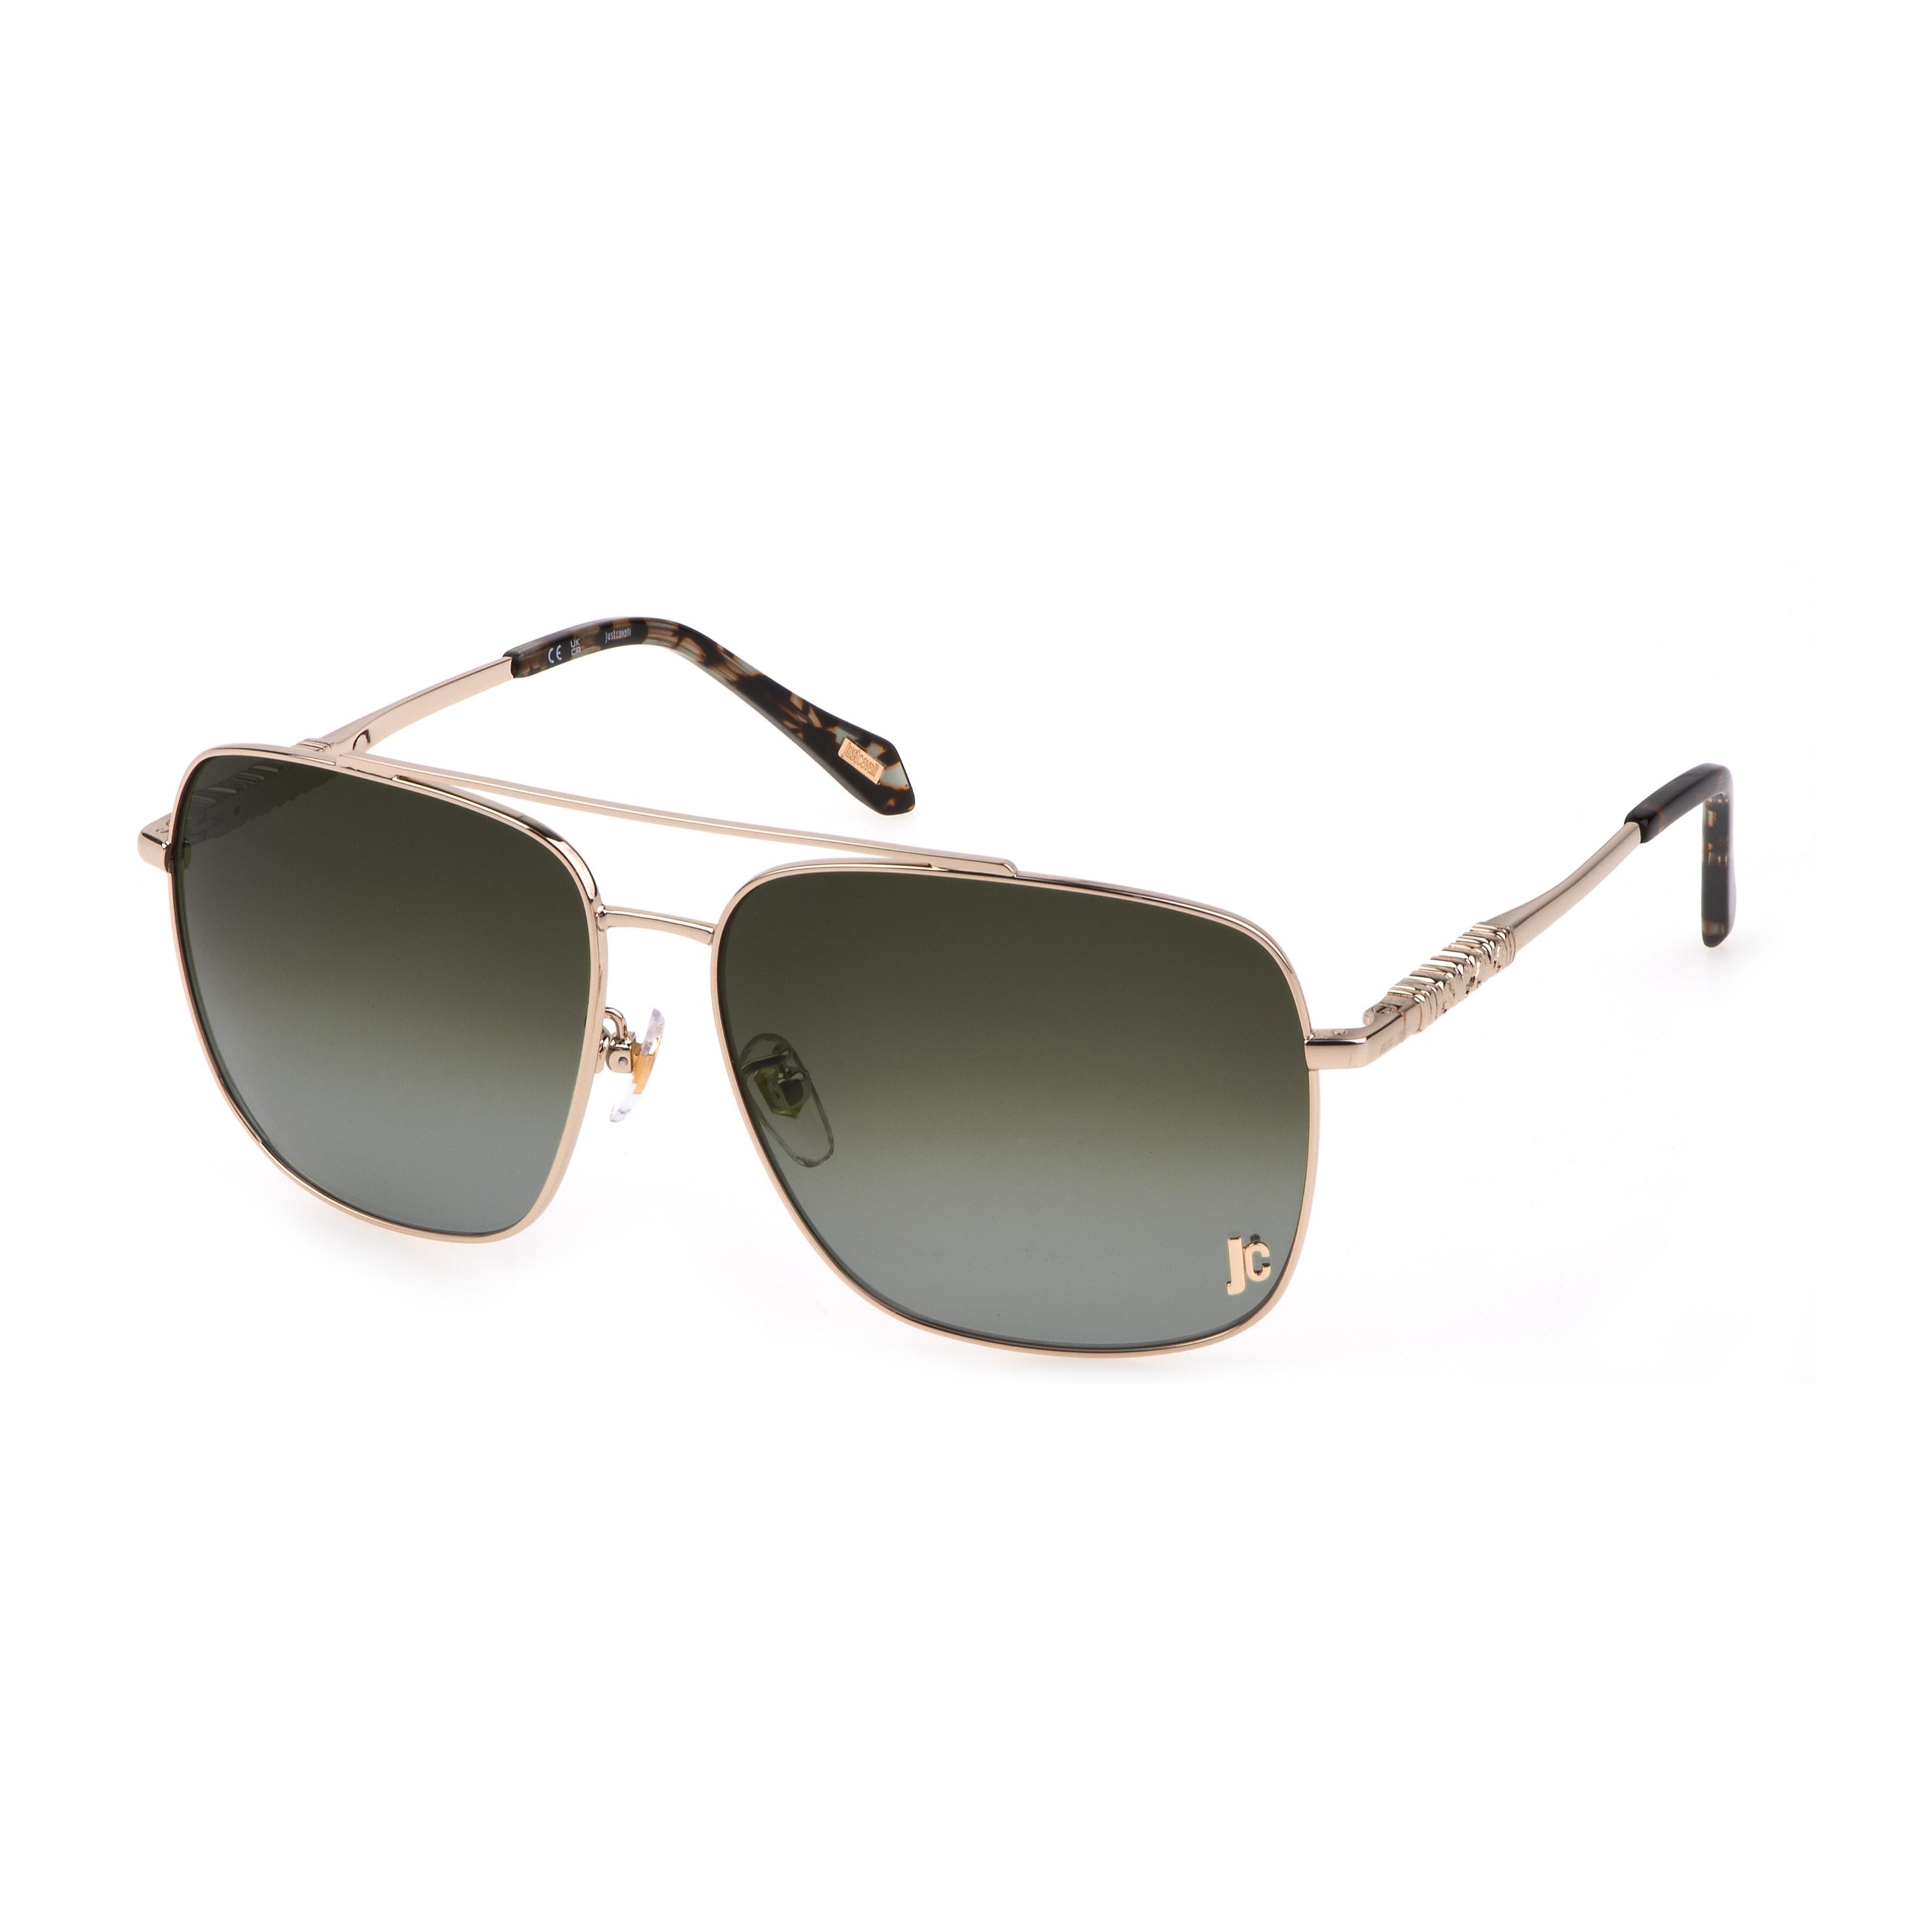 SJC030 Square Sunglasses 493 - size 61